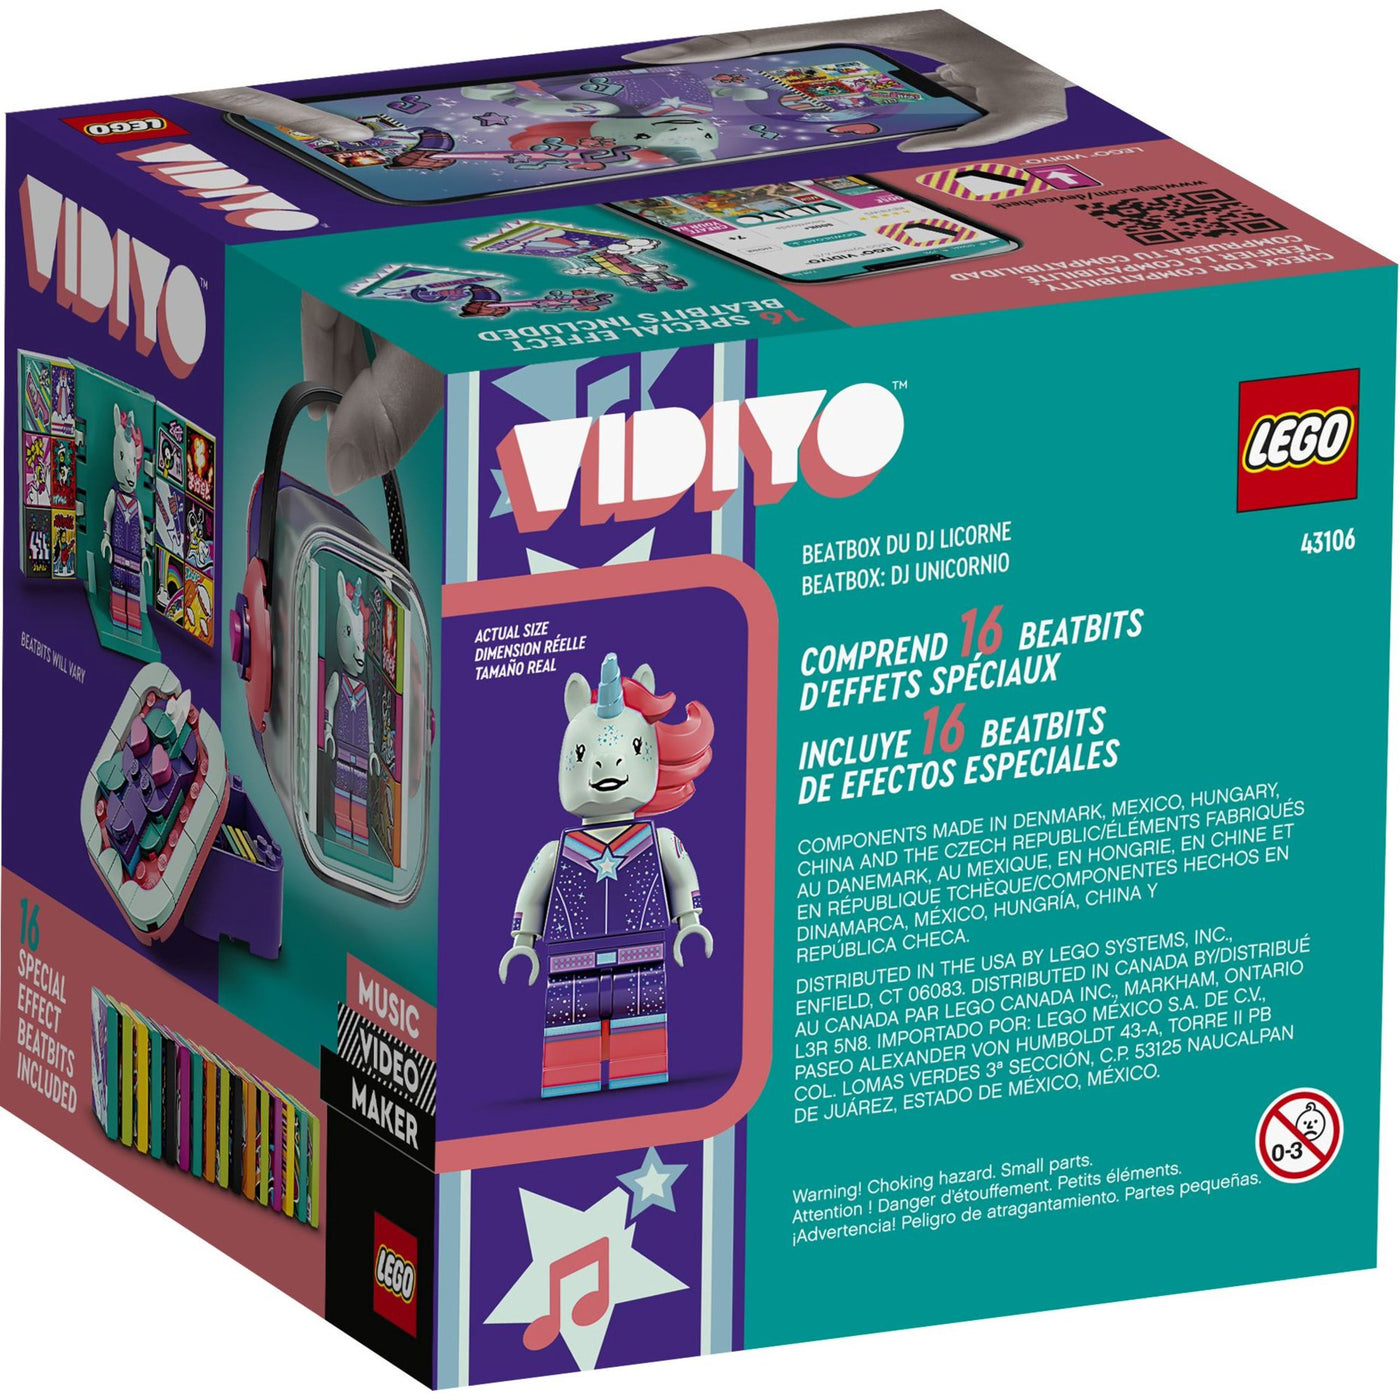 LEGO Unicorn DJ BeatBox 43106 Building Set (84 Pieces) – Zerg Toys